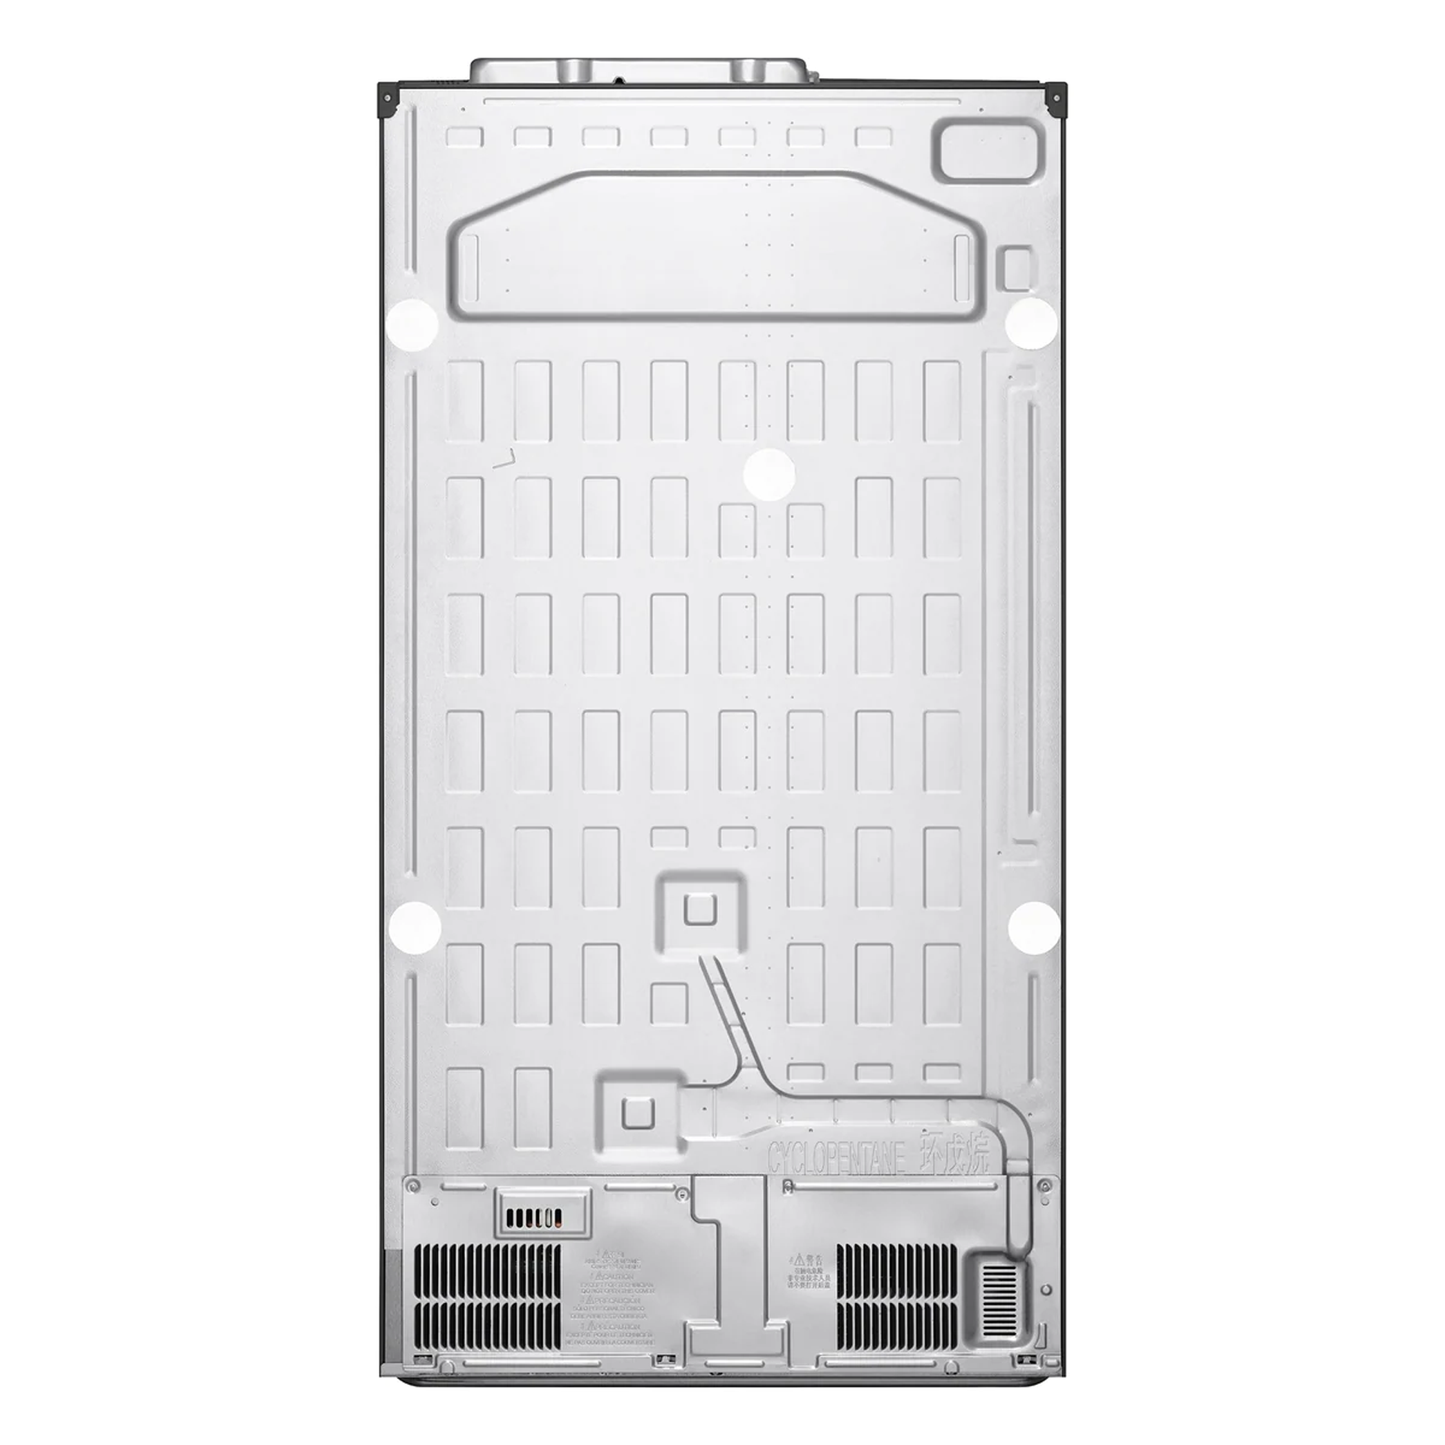 LG S651MC78A  InstaView Door-in-Door™ side-by-side fridge 雪櫃 647L